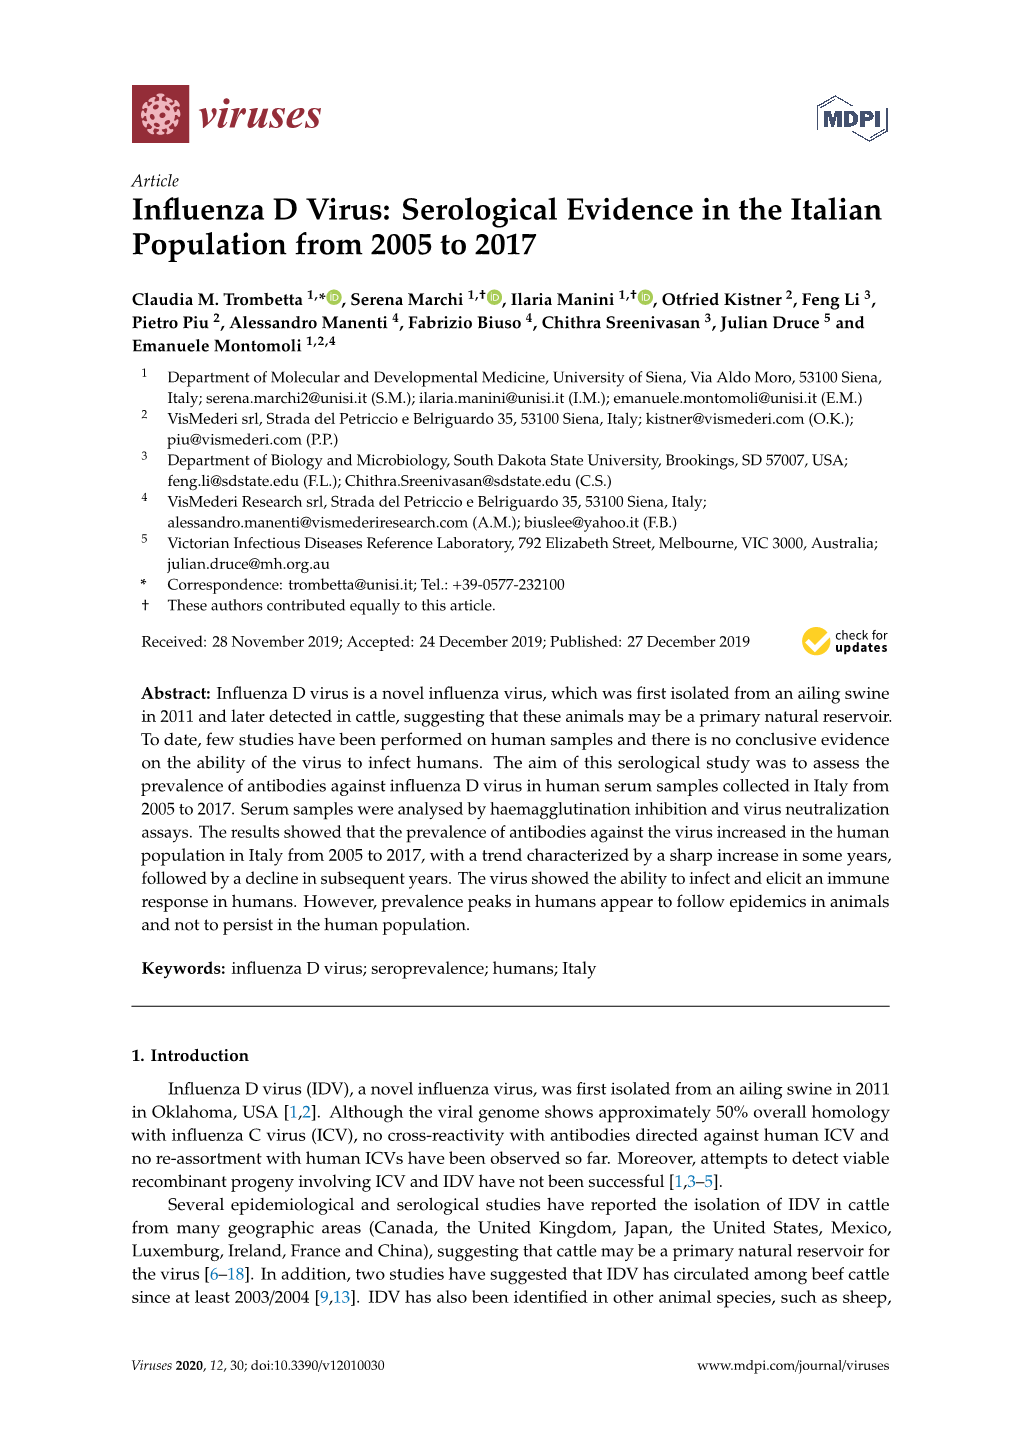 Influenza D Virus: Serological Evidence in the Italian Population